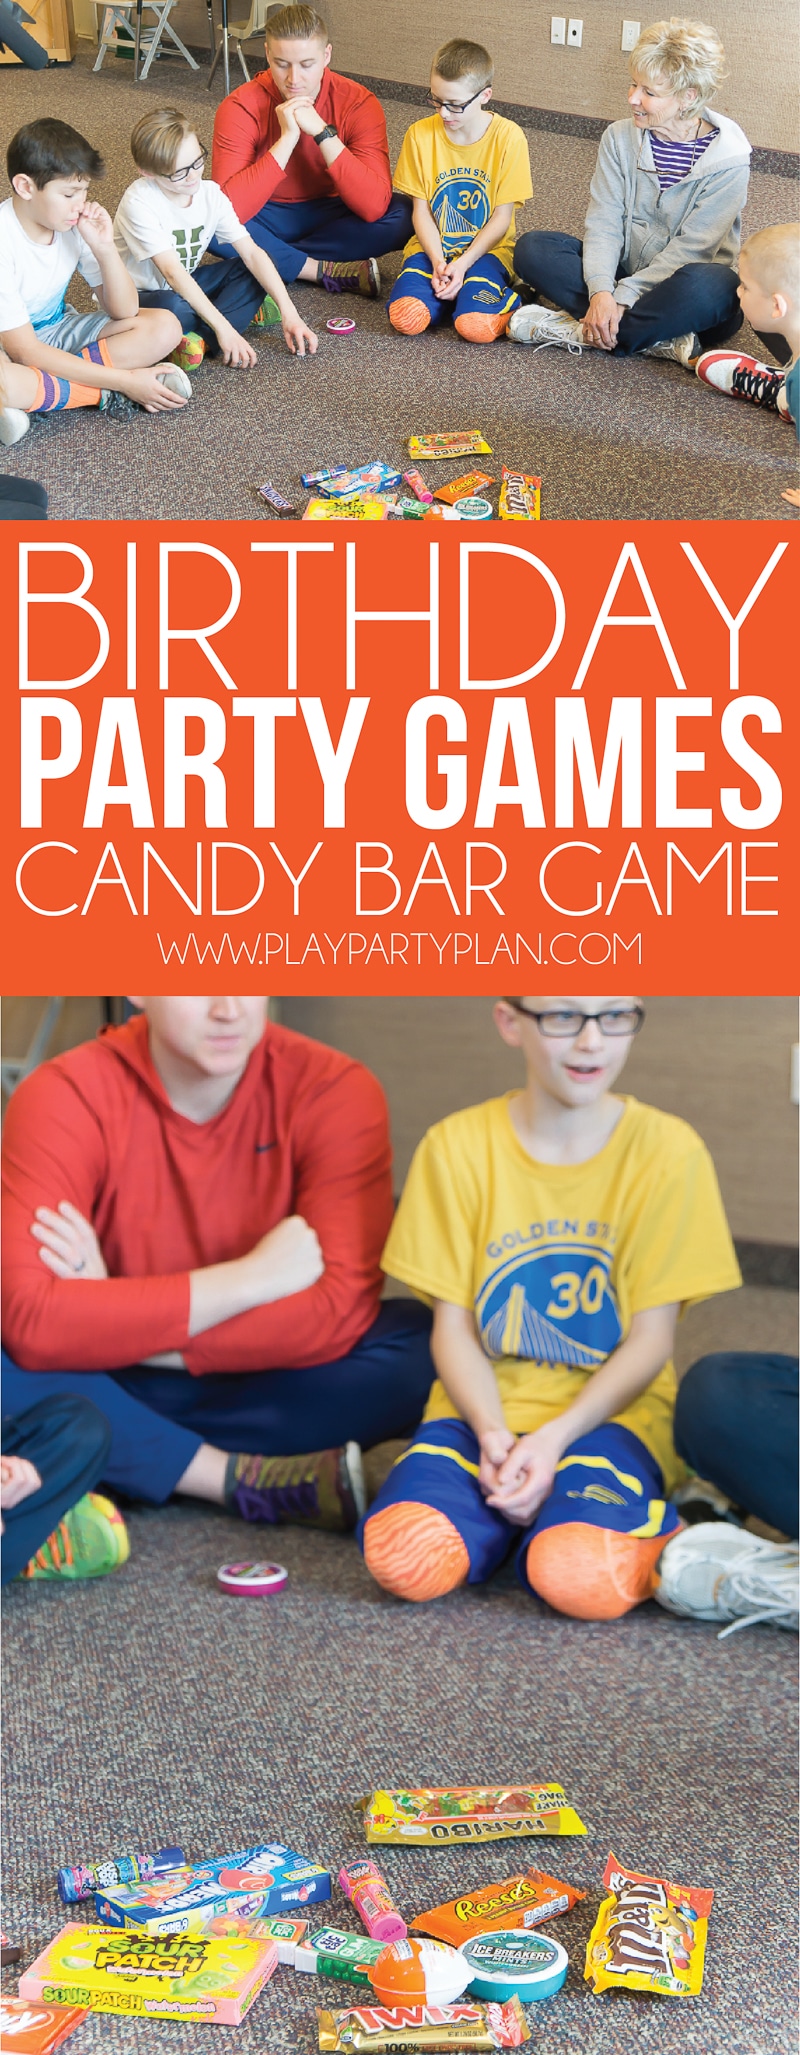 Birthday Games Candy Bar Game 1 